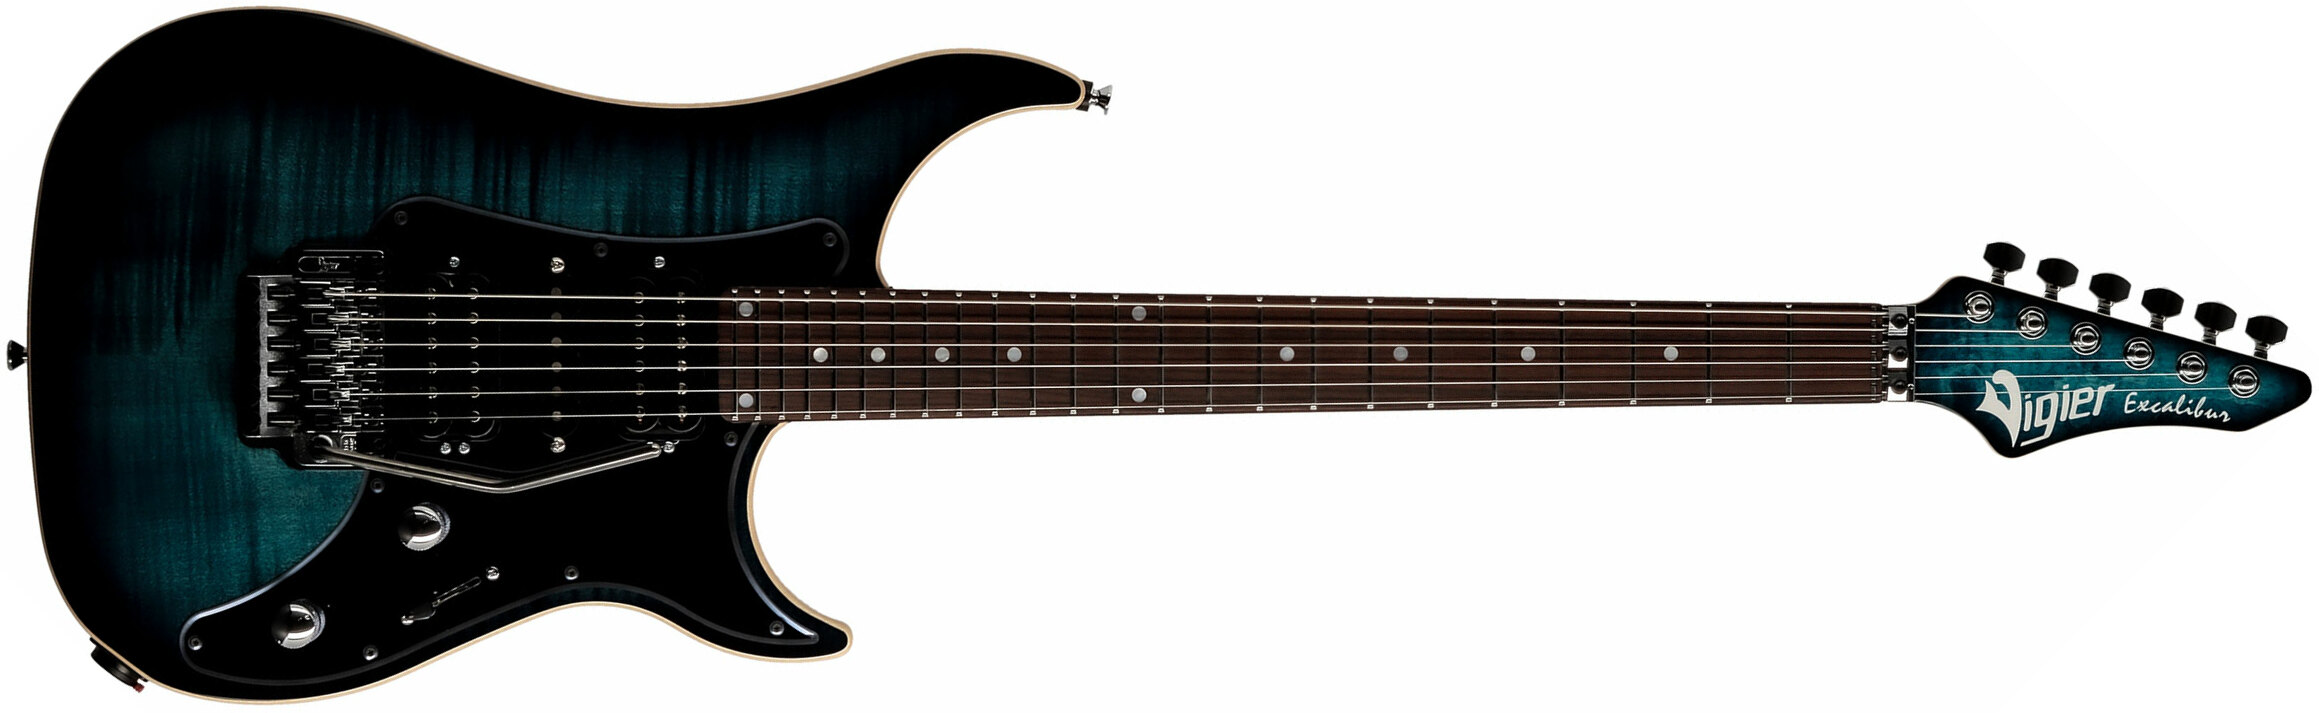 Vigier Excalibur Custom Hsh Fr Rw - Mysterious Blue - E-Gitarre in Str-Form - Main picture